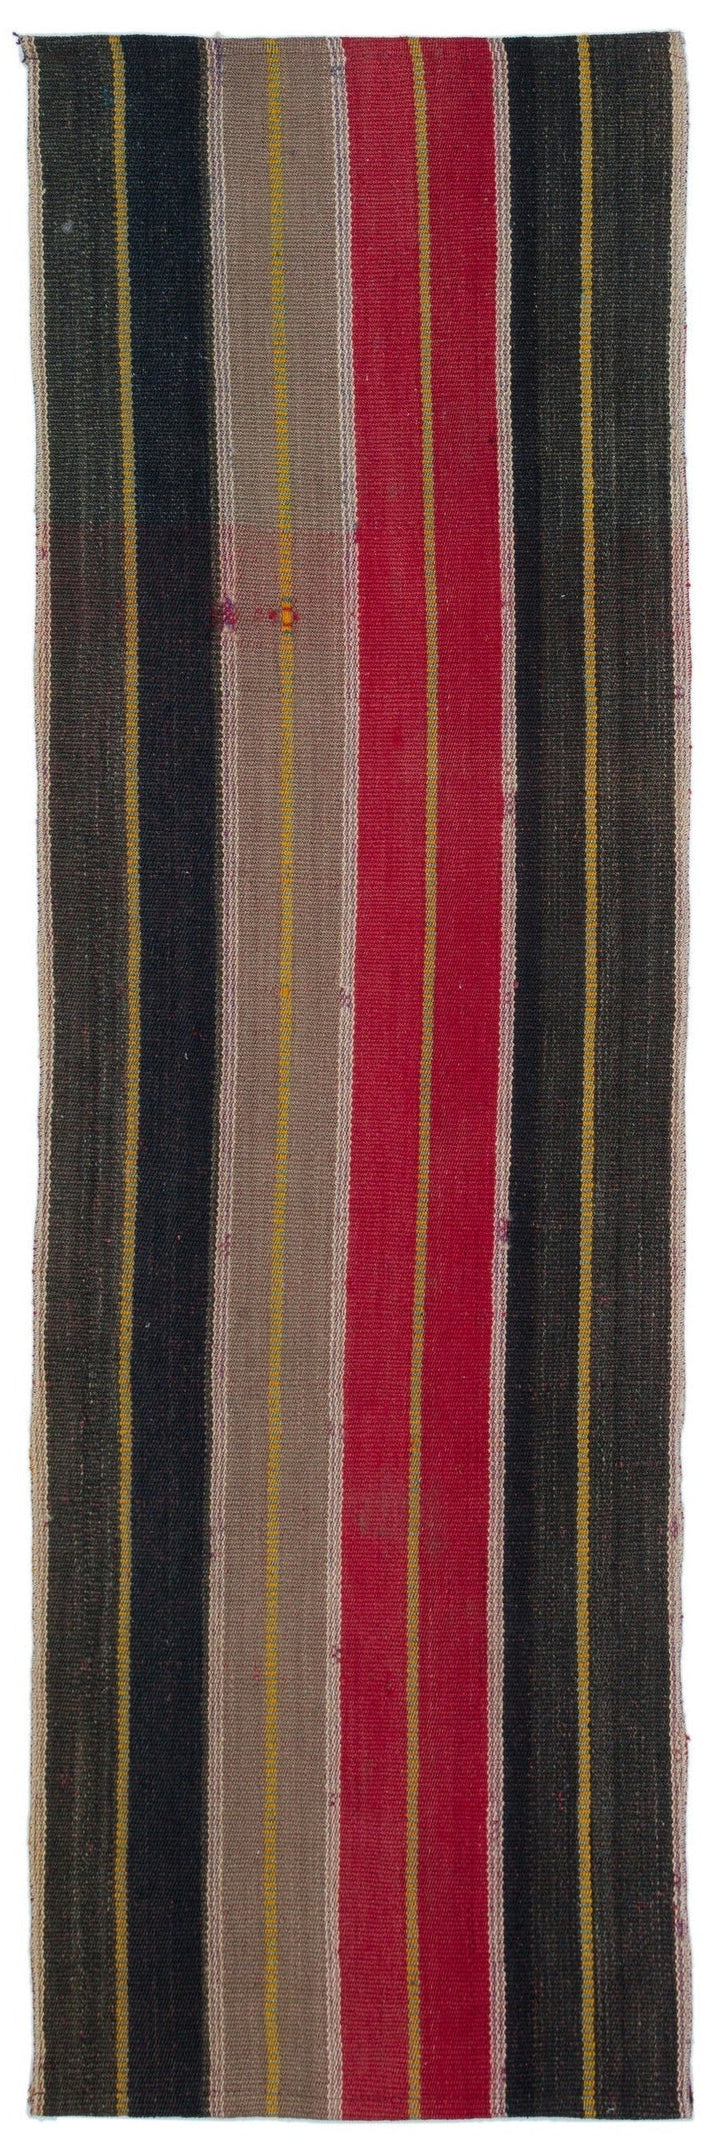 Cretan Brown Striped Wool Hand-Woven Carpet 072 x 240